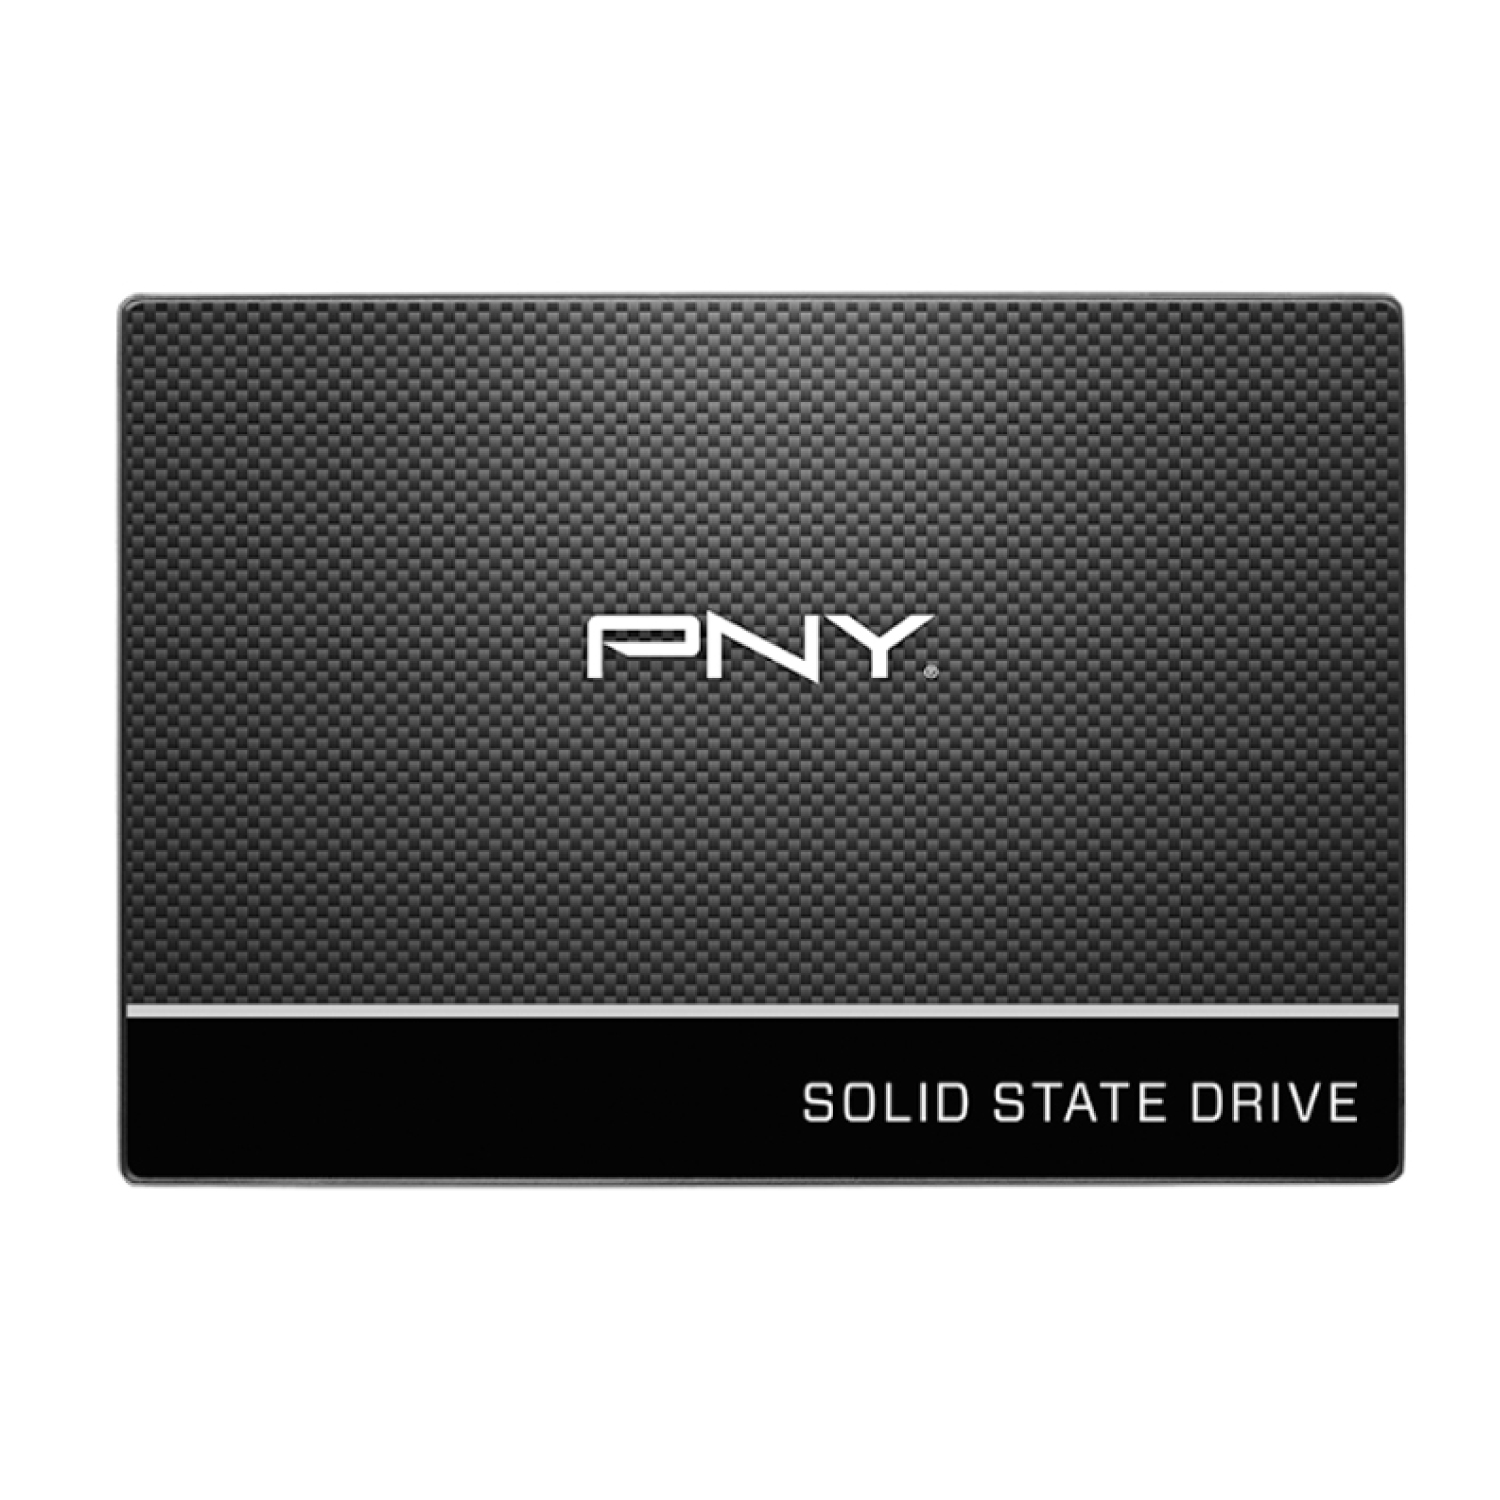 DISCO SOLIDO PNY SSD 250GB WRITE 500 MB/S READ 535 MB/S BLACK